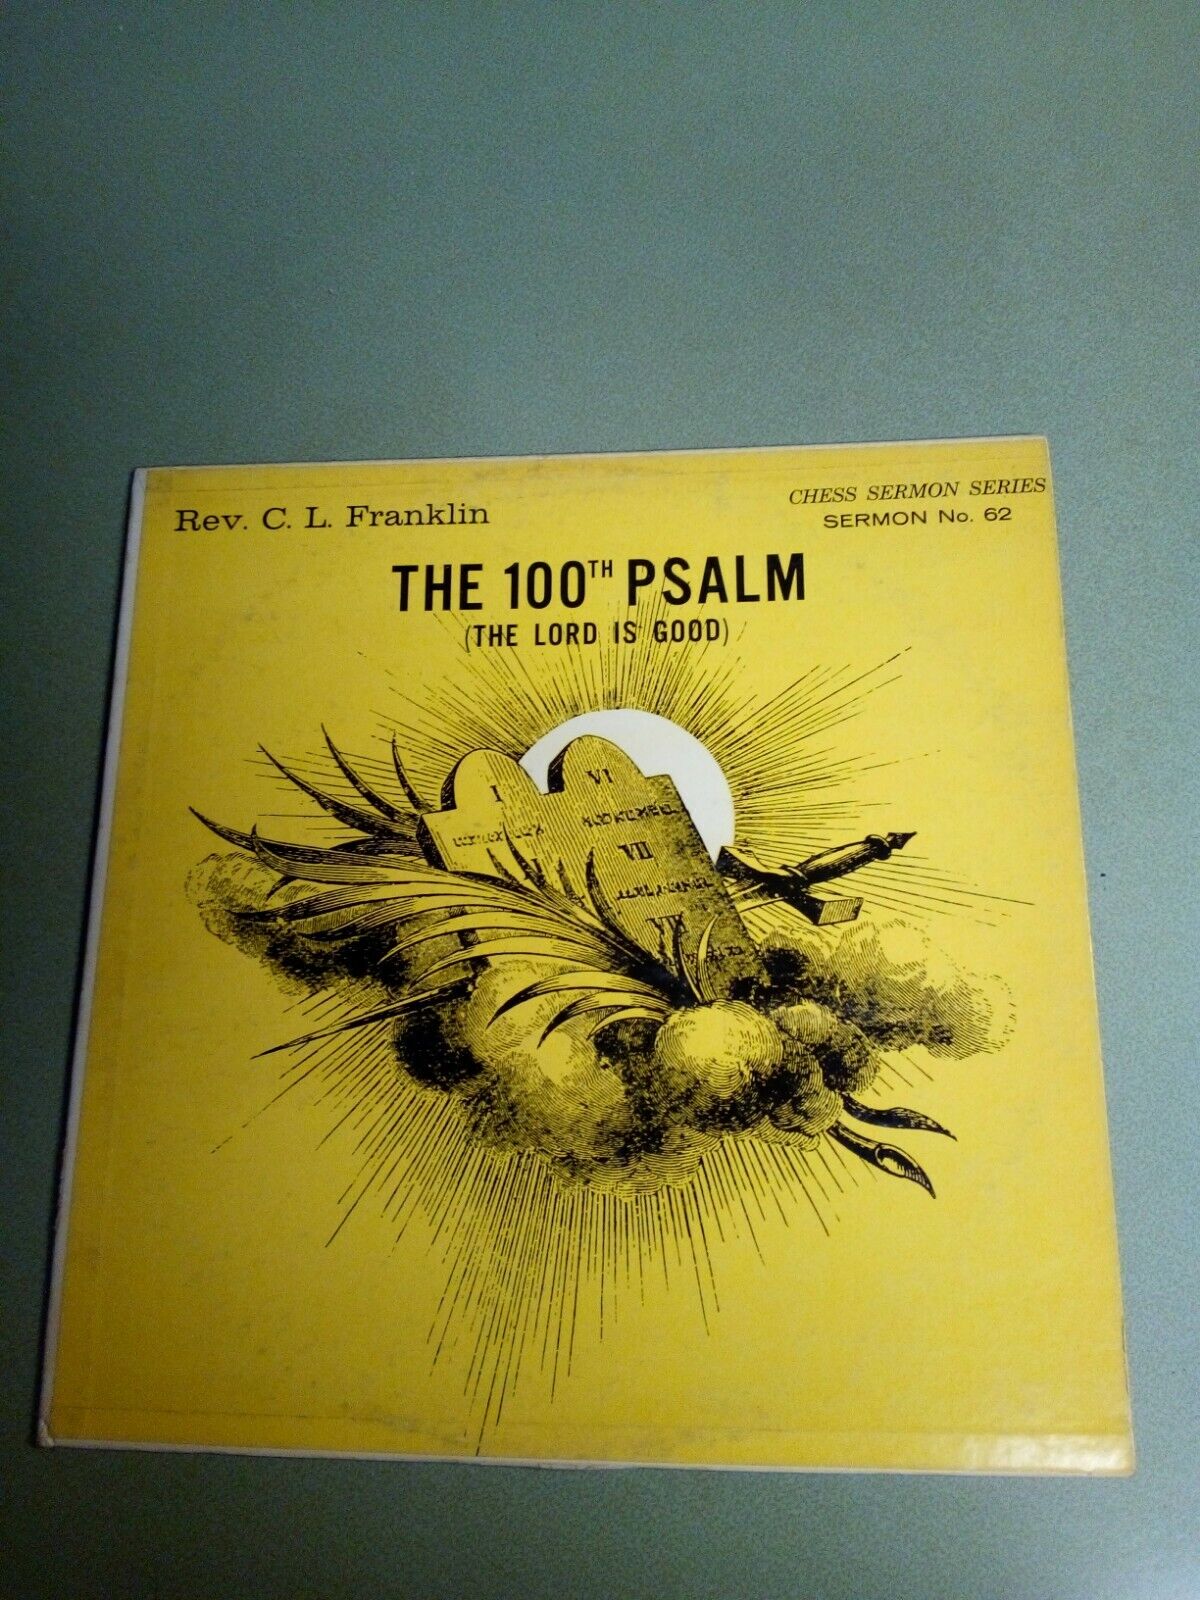 THE 100TH PSALM RPM LP BY REV. C.L. FRANKLIN RARE VINTAGE